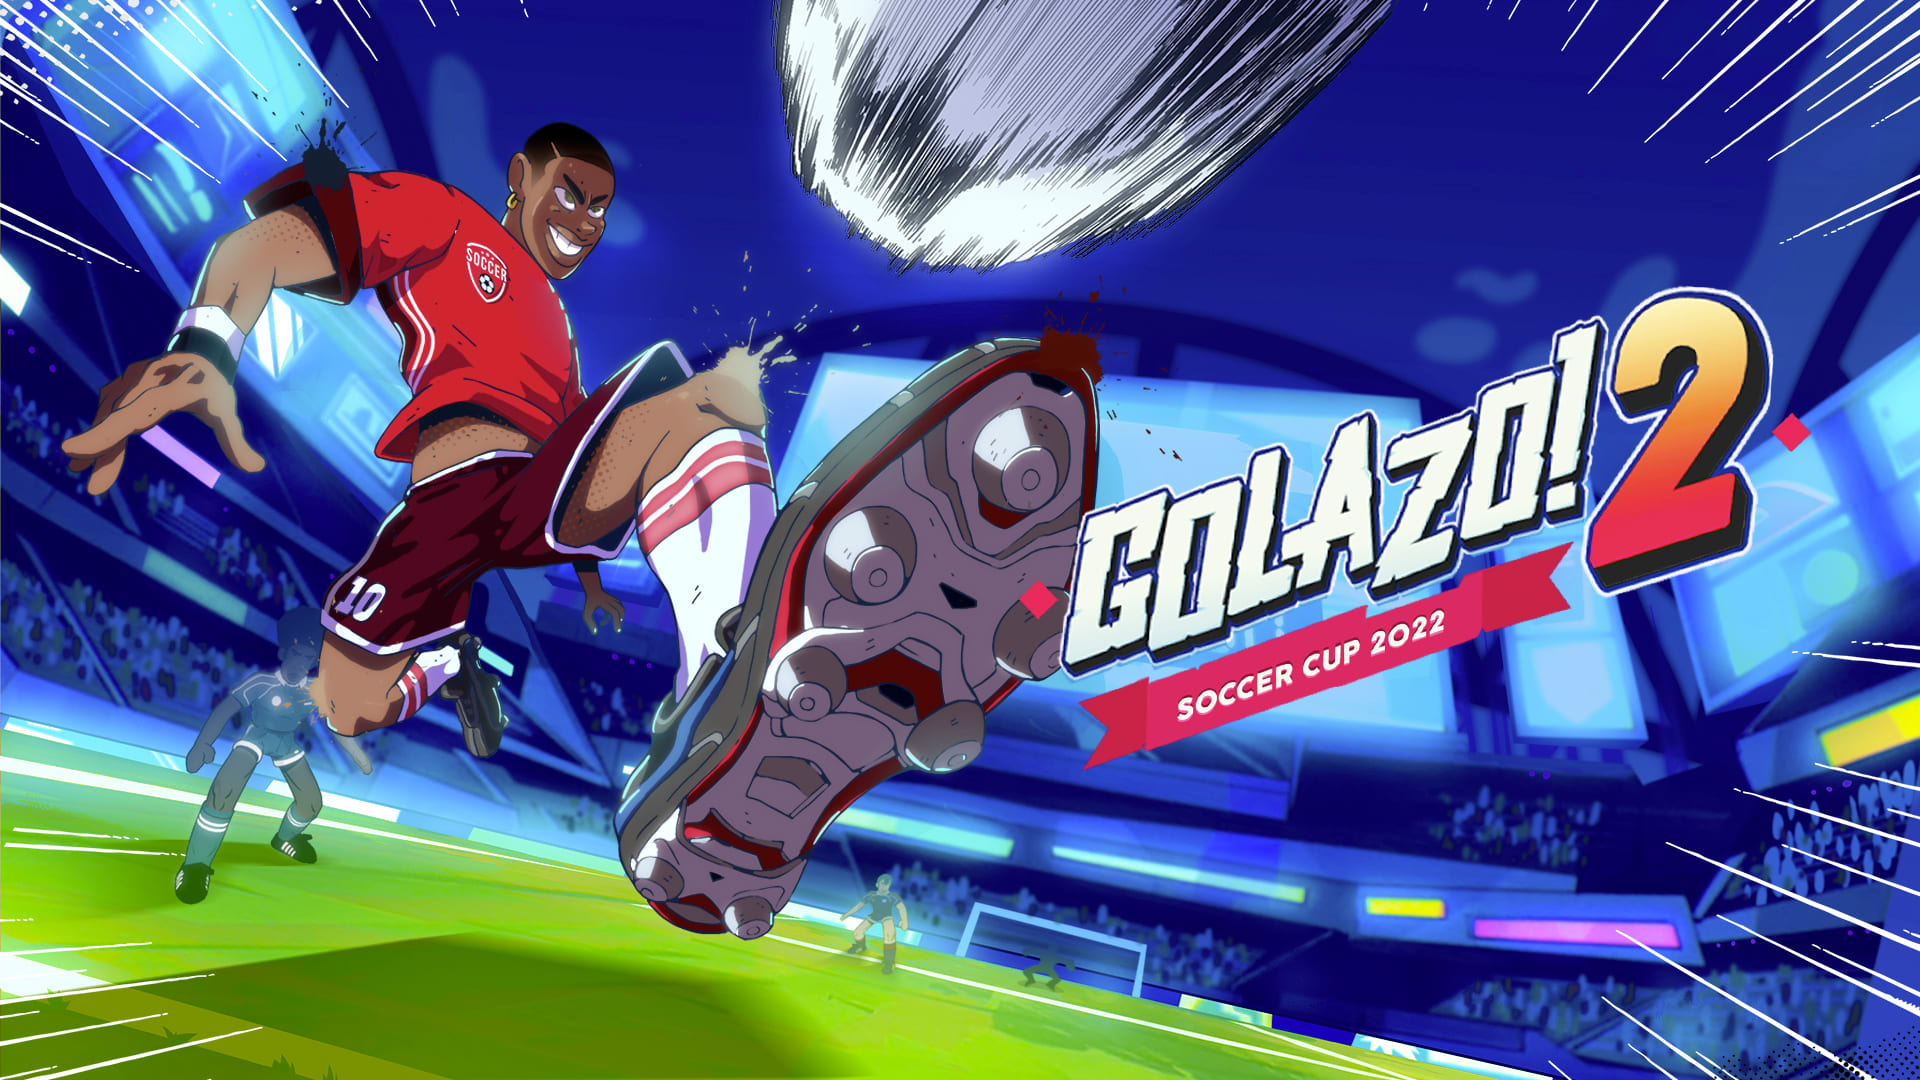 Golazo! 2: Soccer Cup 2022 1